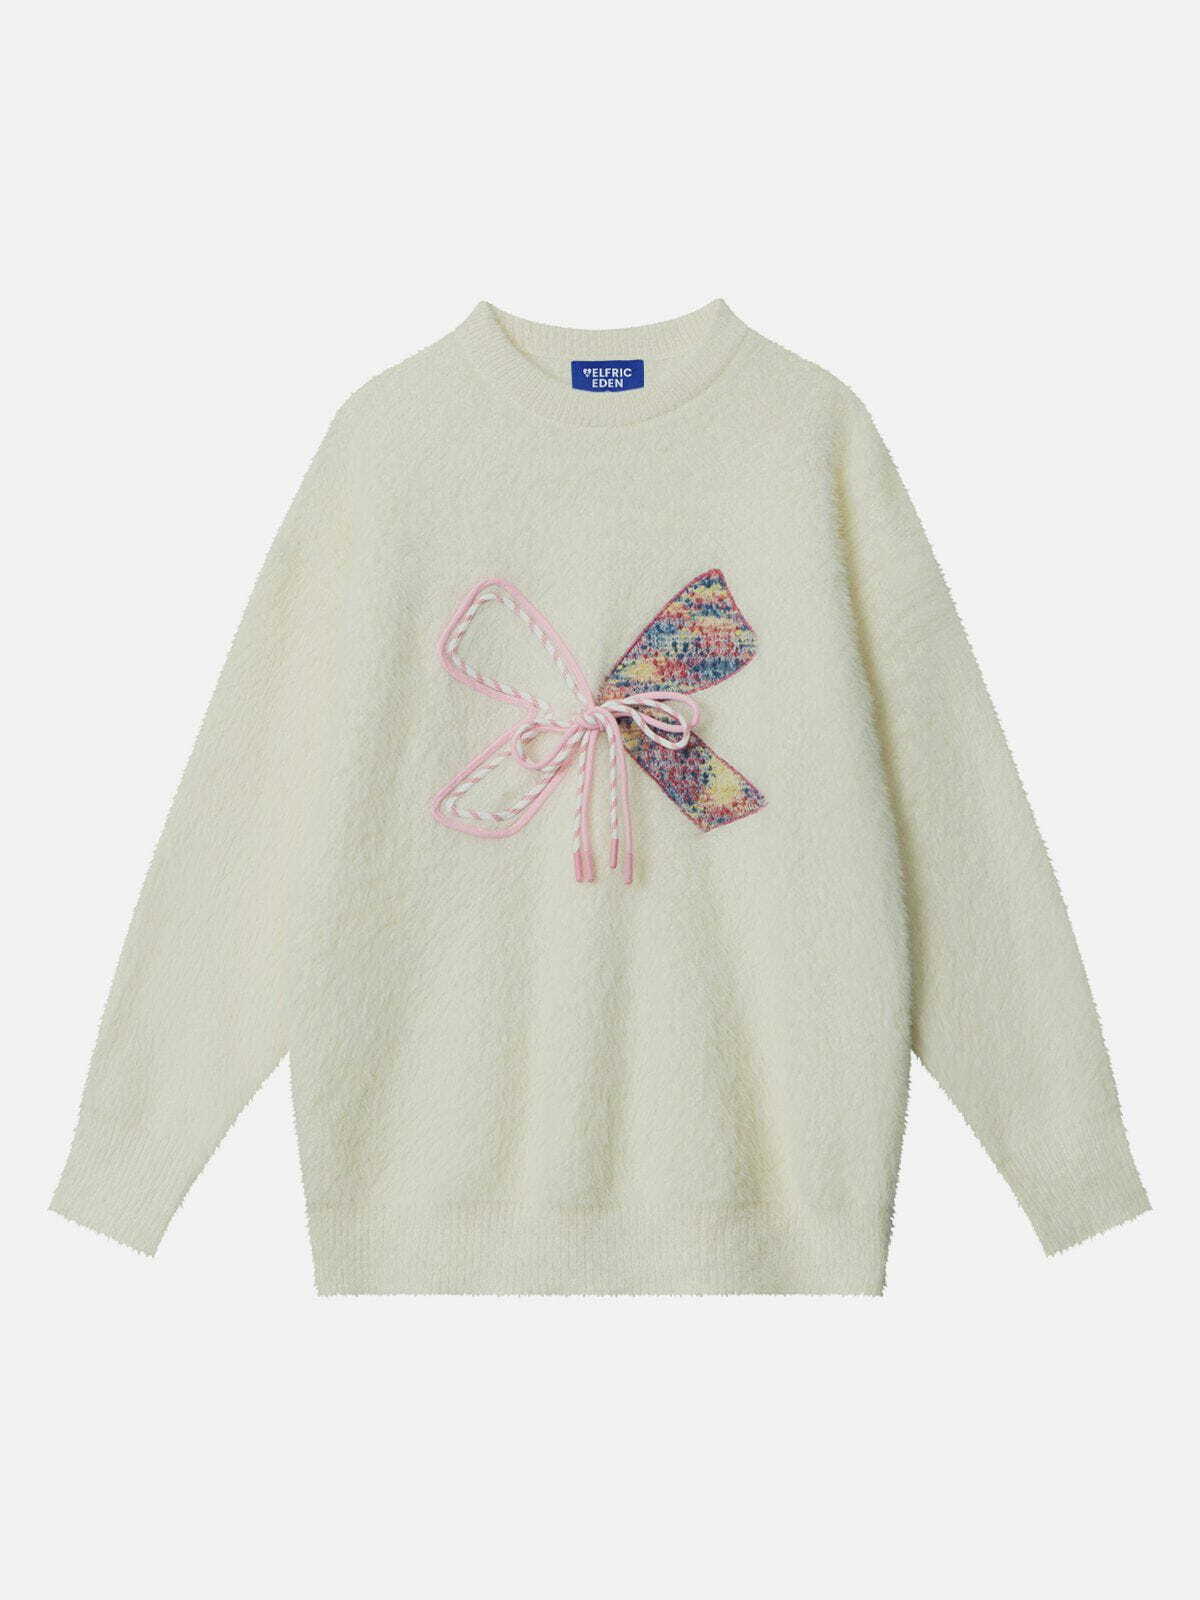 retro bow sweater edgy & vibrant y2k fashion 3087